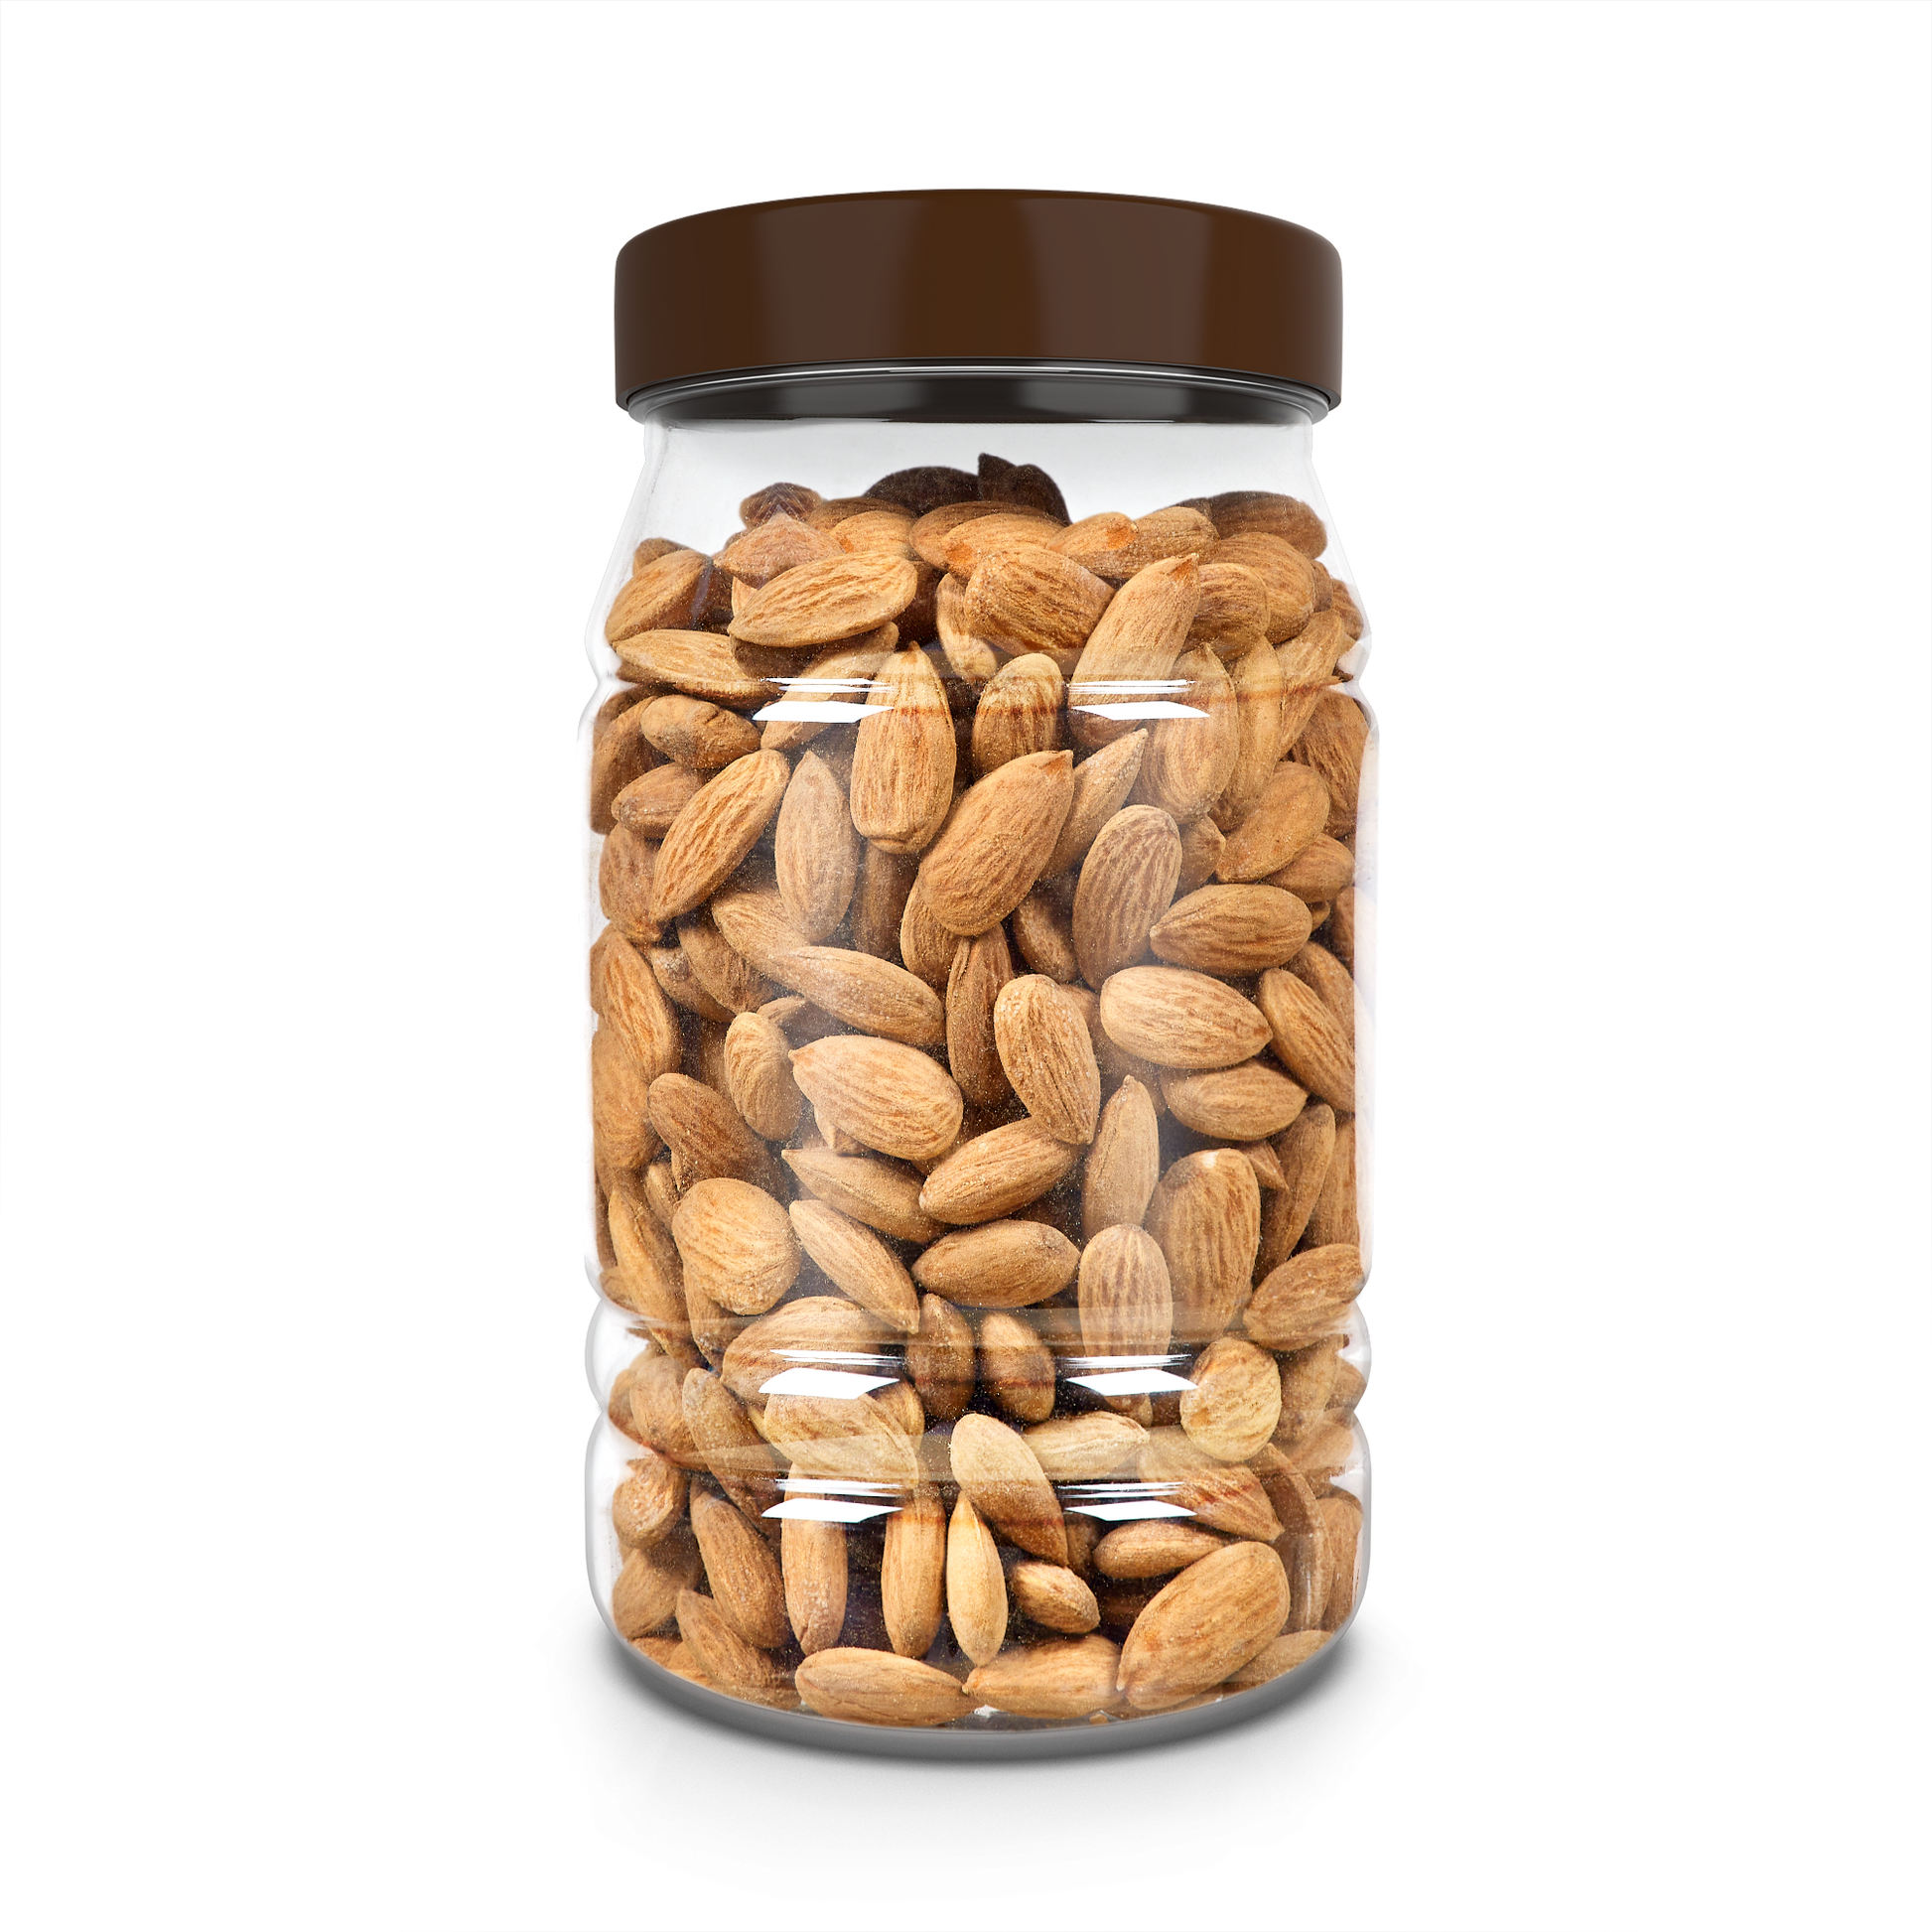 SAO Foods Roasted  & Salted Almonds 500 gm